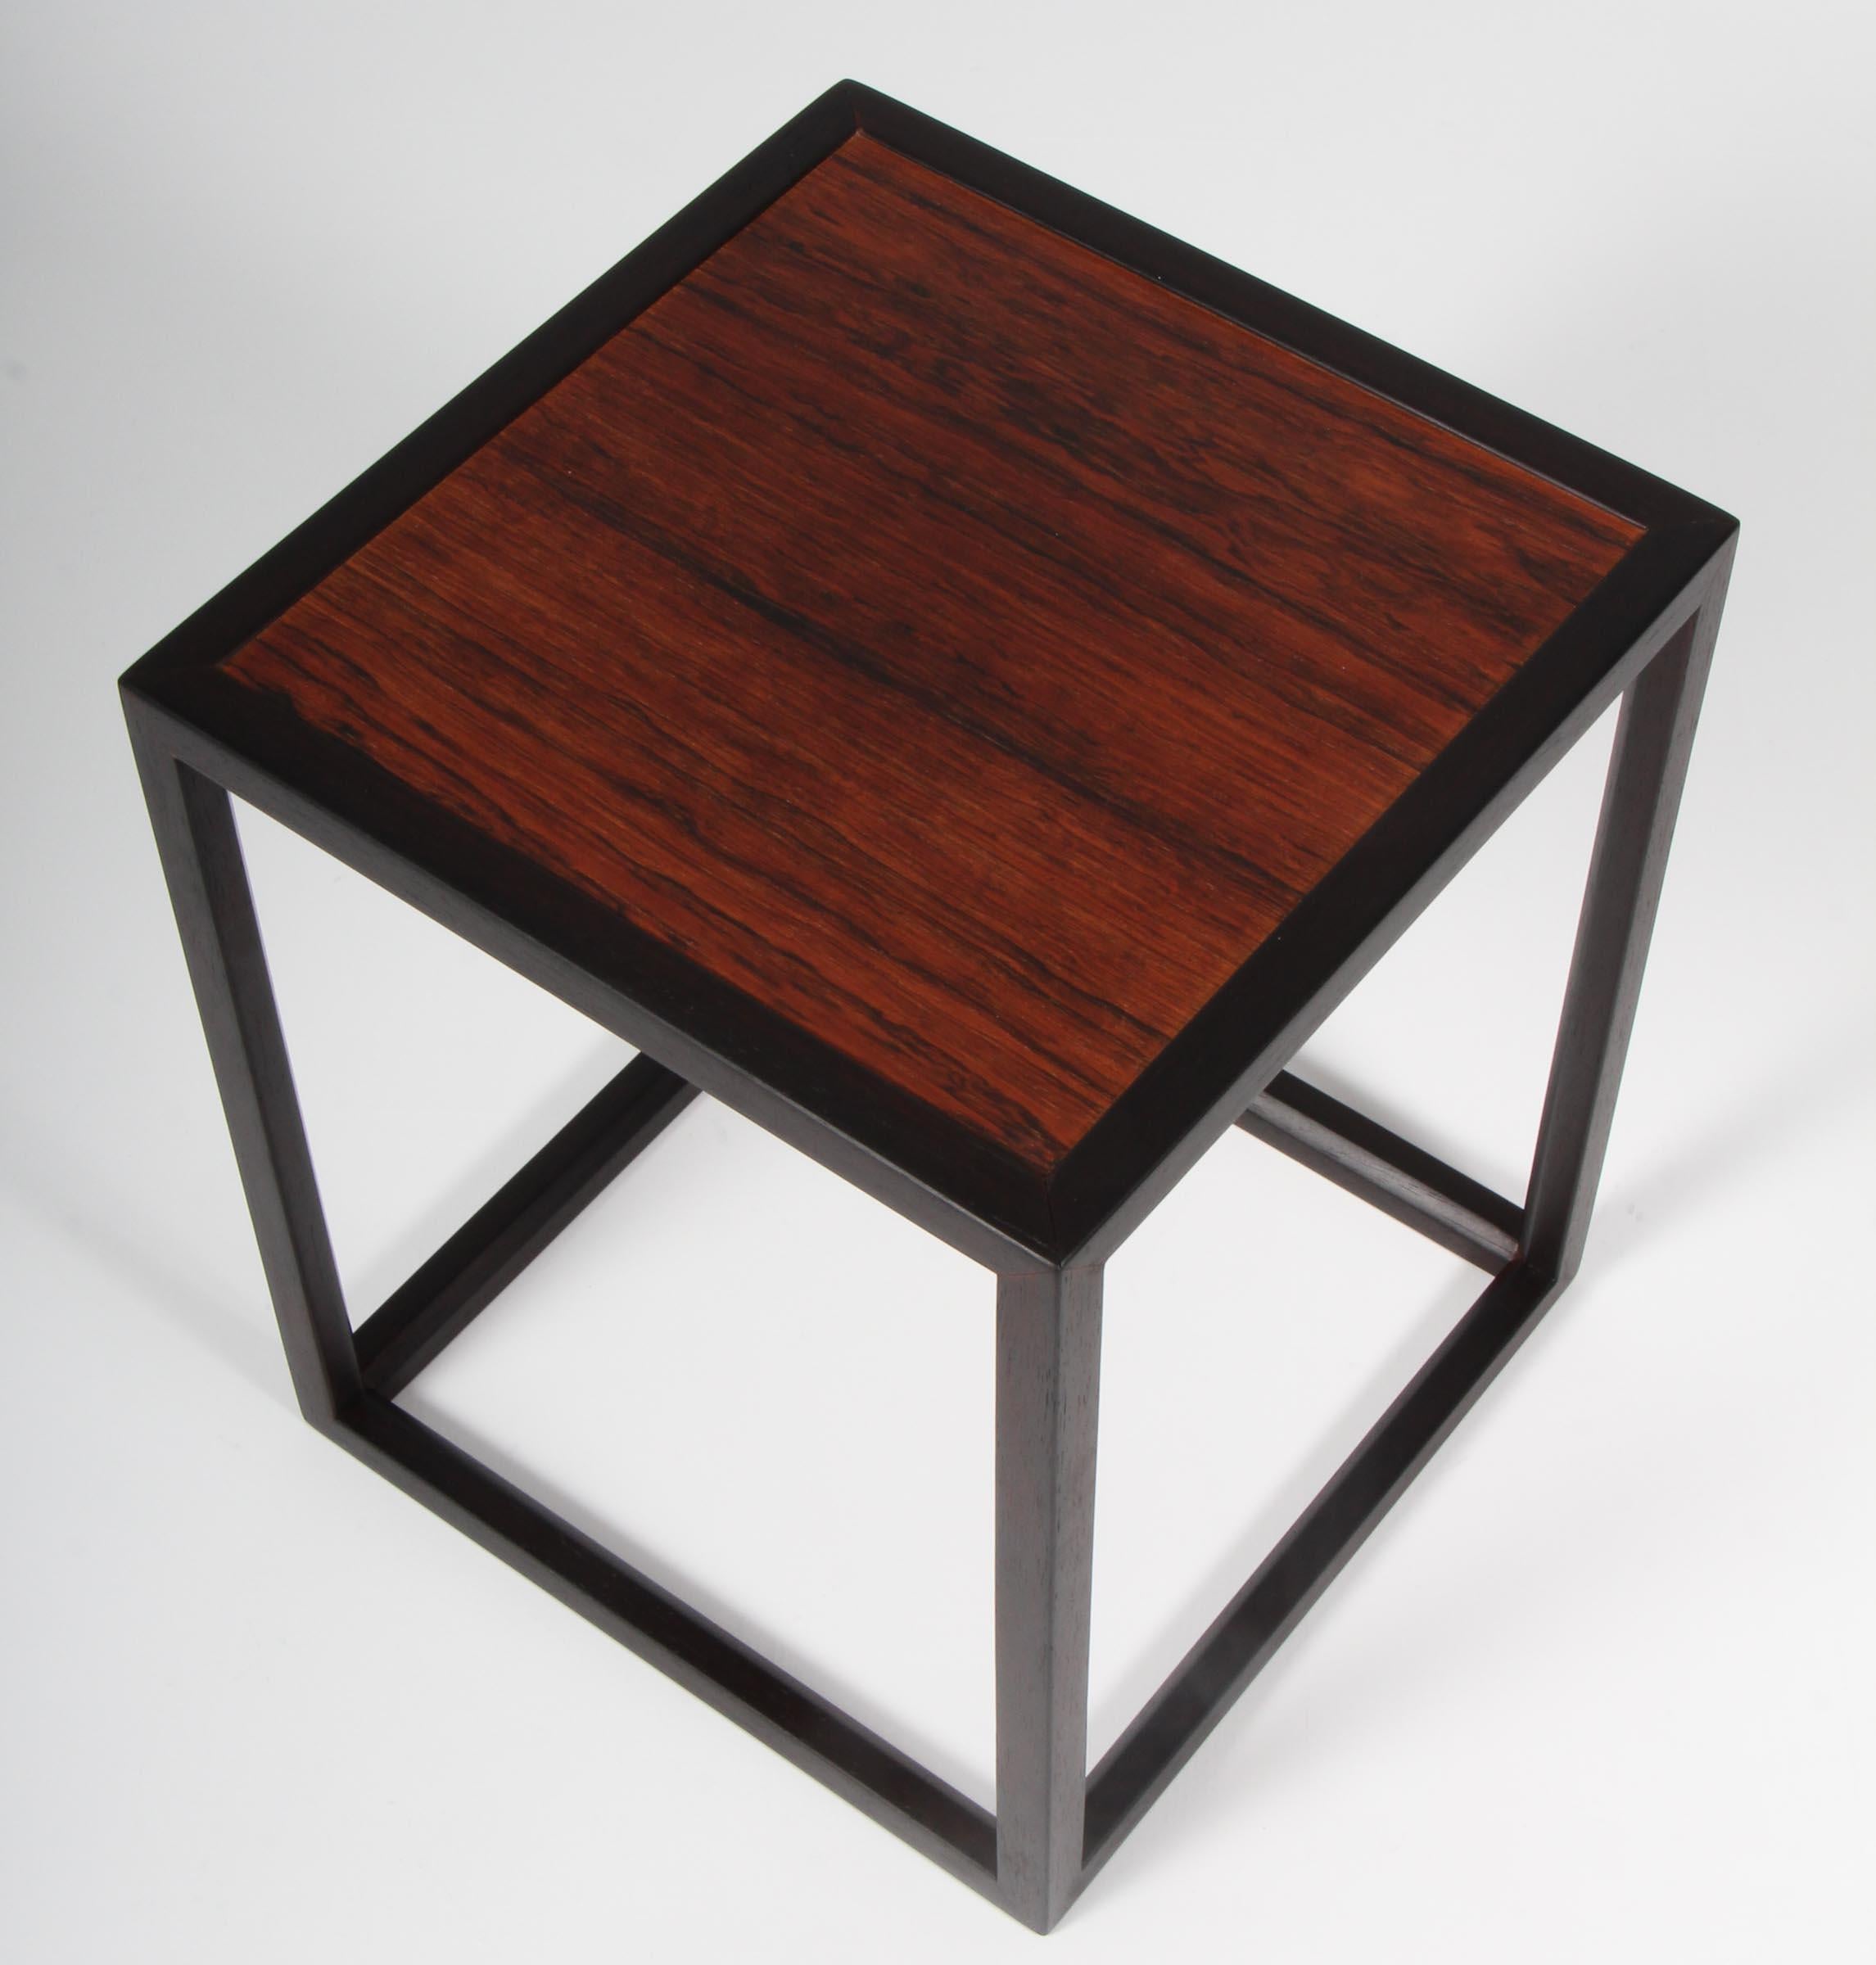 Ejner Larsen & Aksel Bender Madsen side table in rosewood.

Made by Cabinetmaker Willy Beck.